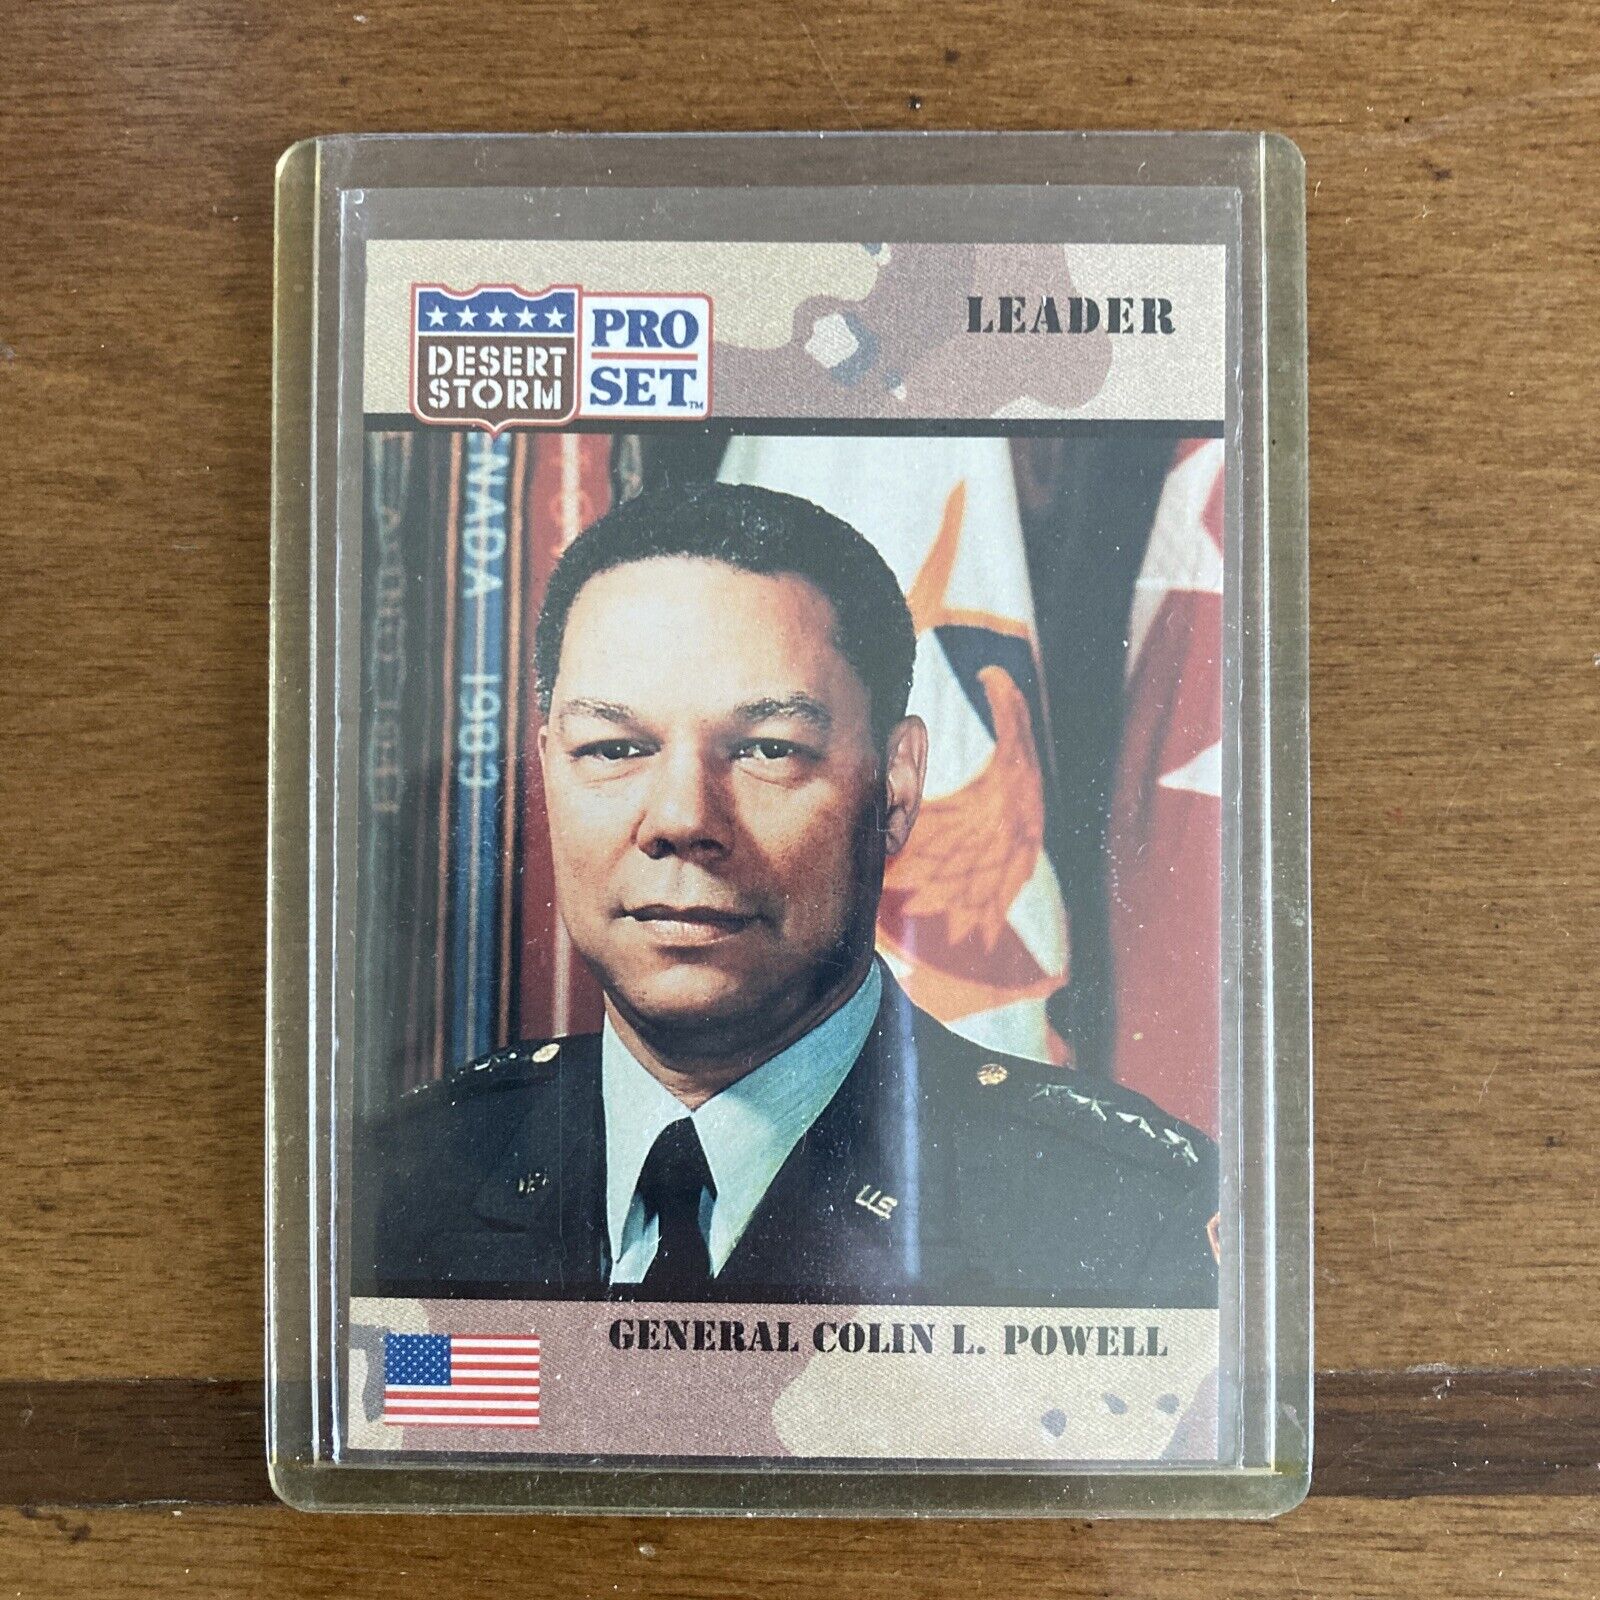 1991 Pro Set Desert Storm General Colin Powell No. 88 USA Vintage Card